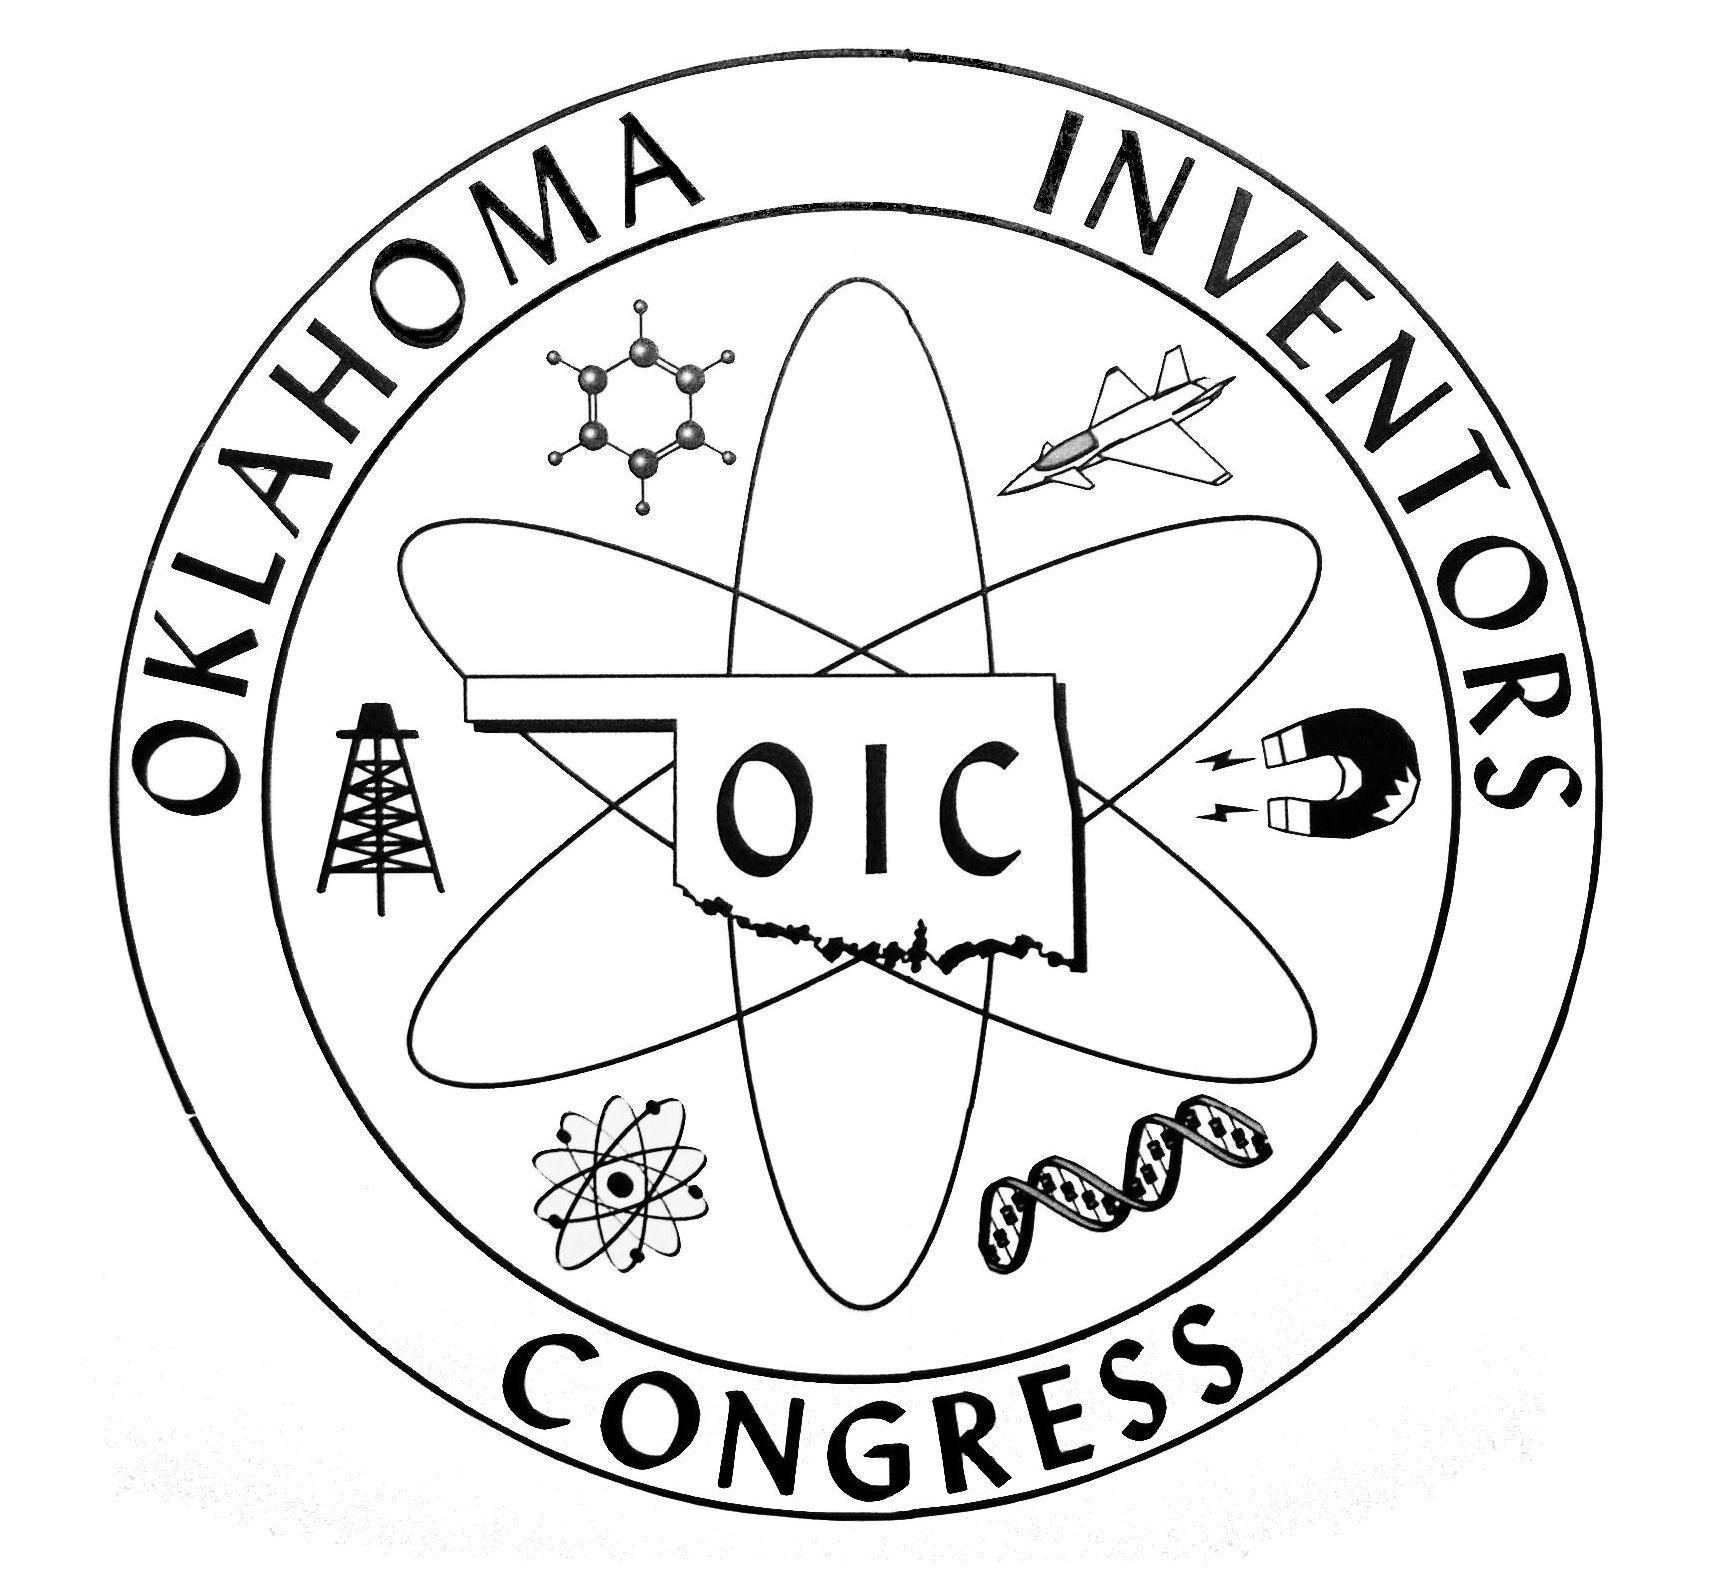 Annual meeting of Oklahoma Inventors Congress Saturday in Tulsa